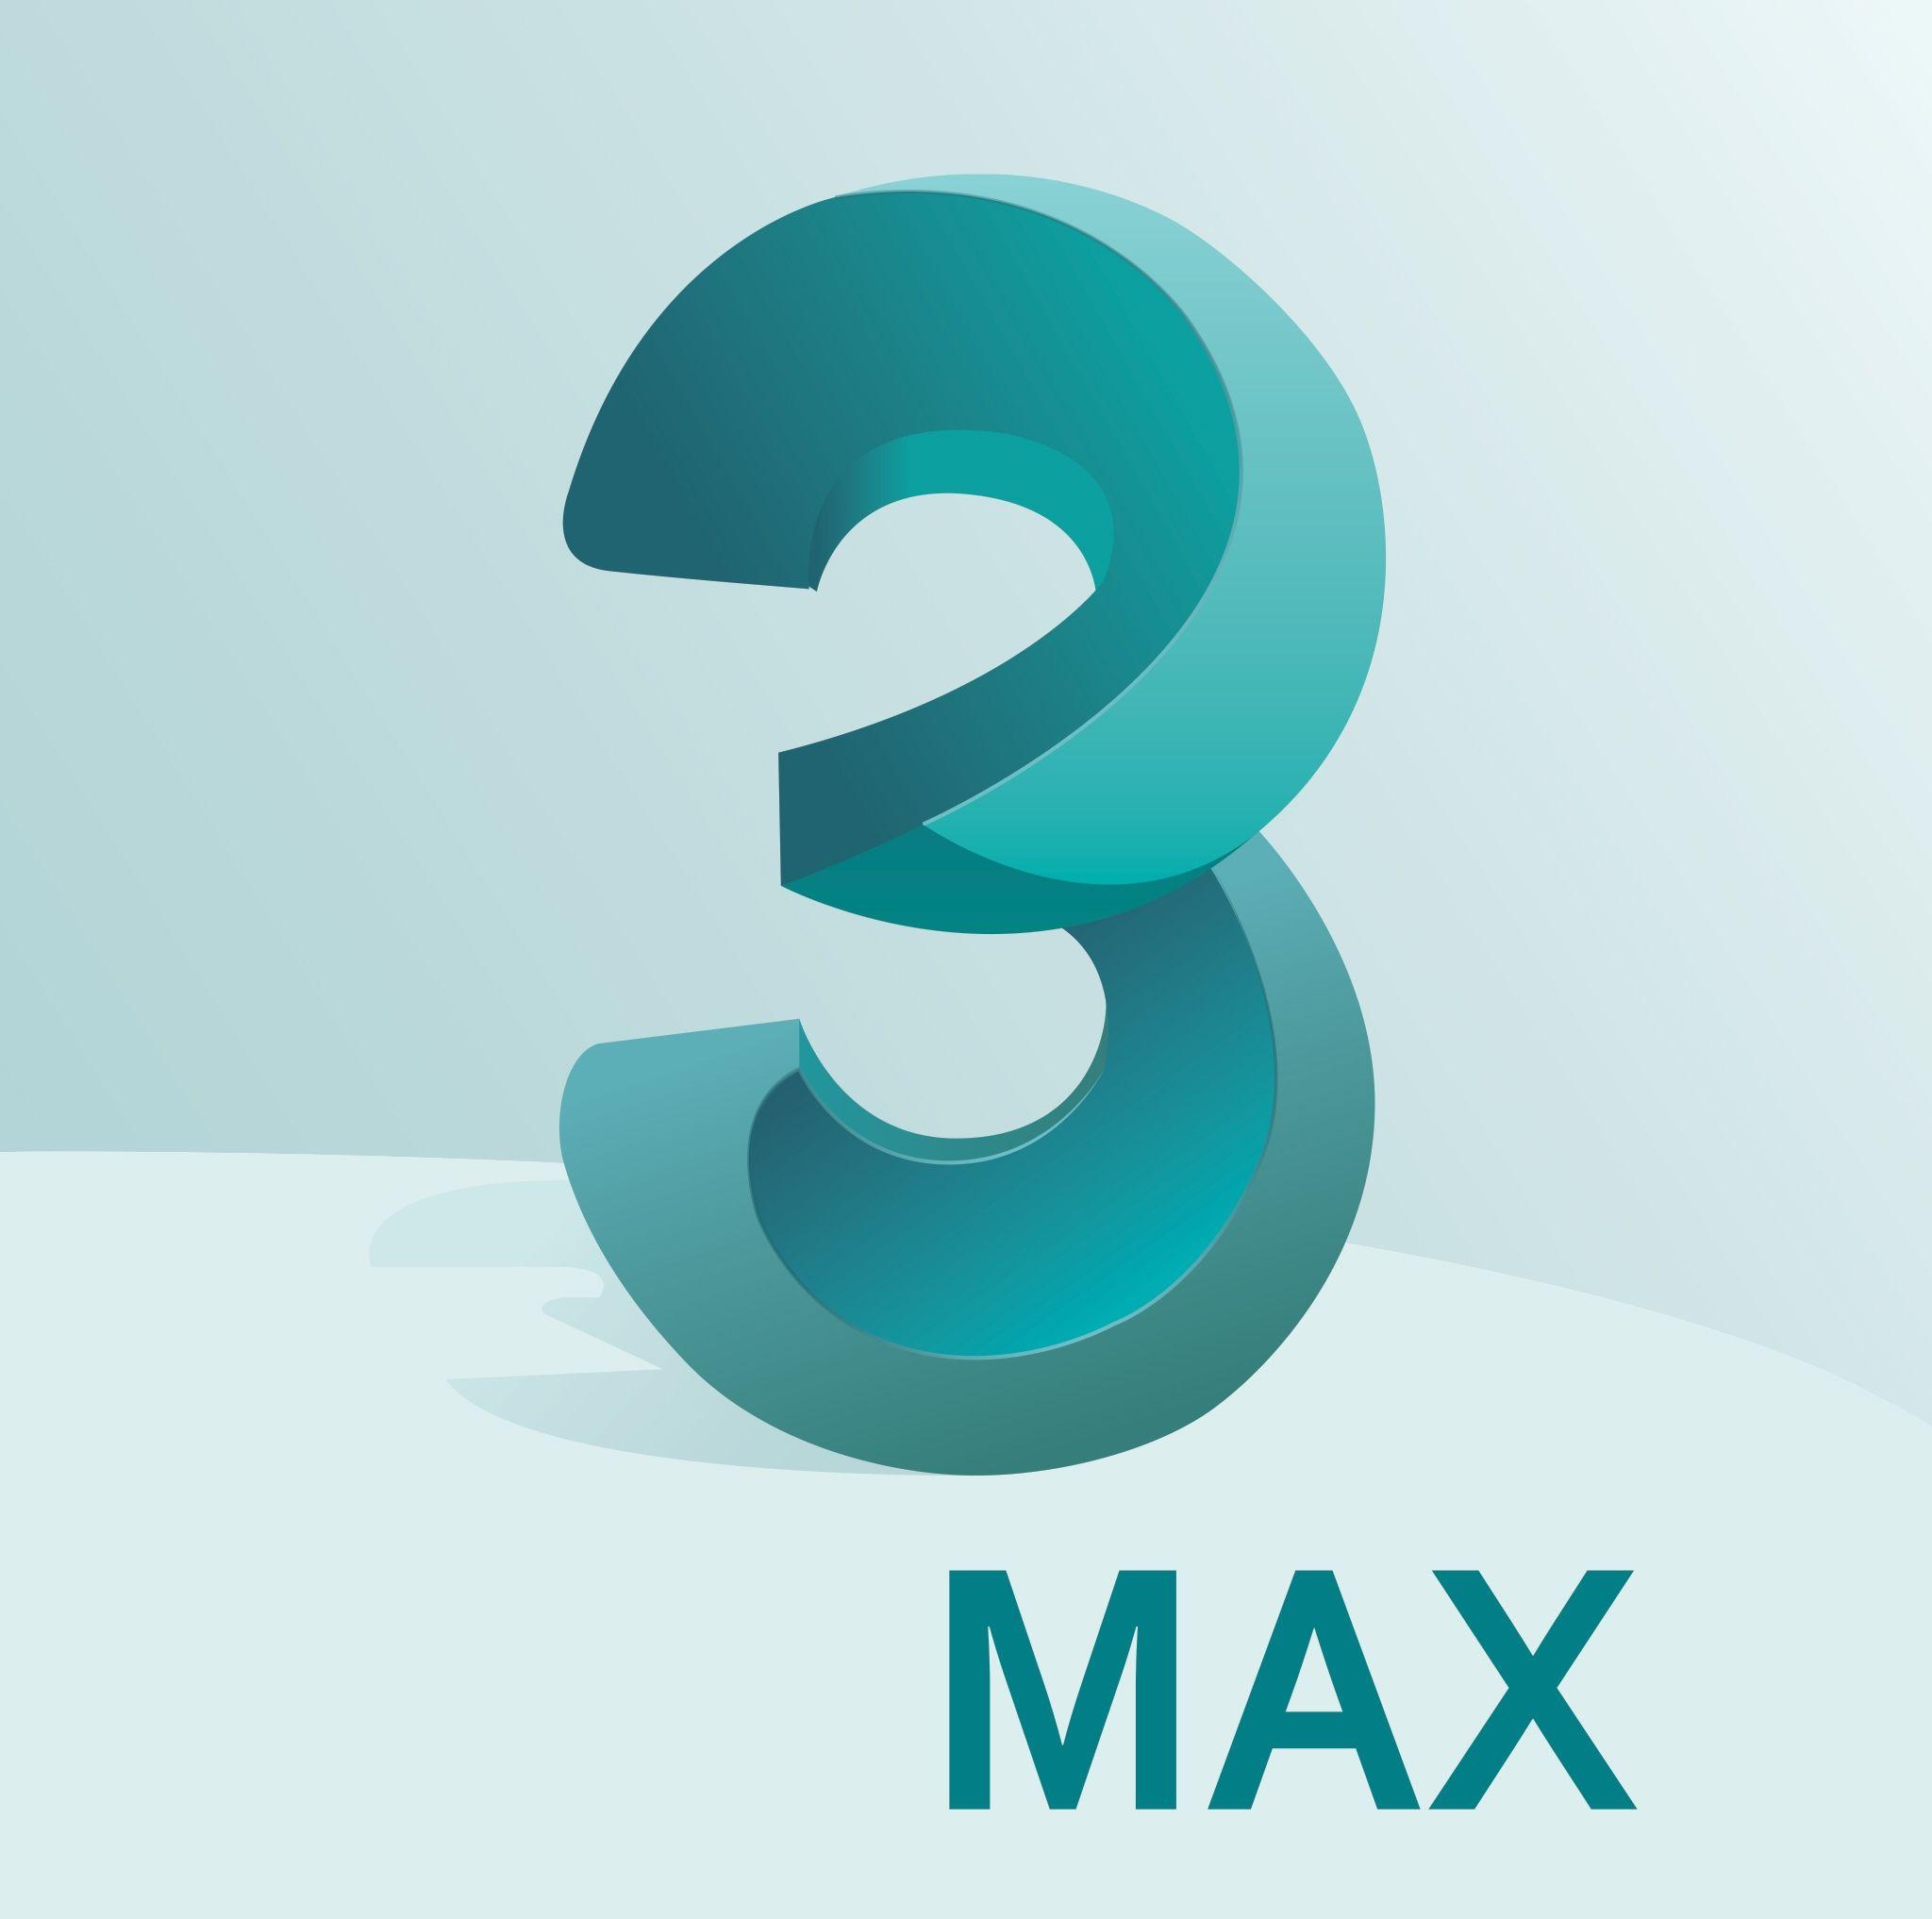 Autodesk 3ds Max Logo - 3DS Max Logo (Autodesk) Download Vector | 3ds max design, 3ds max ...